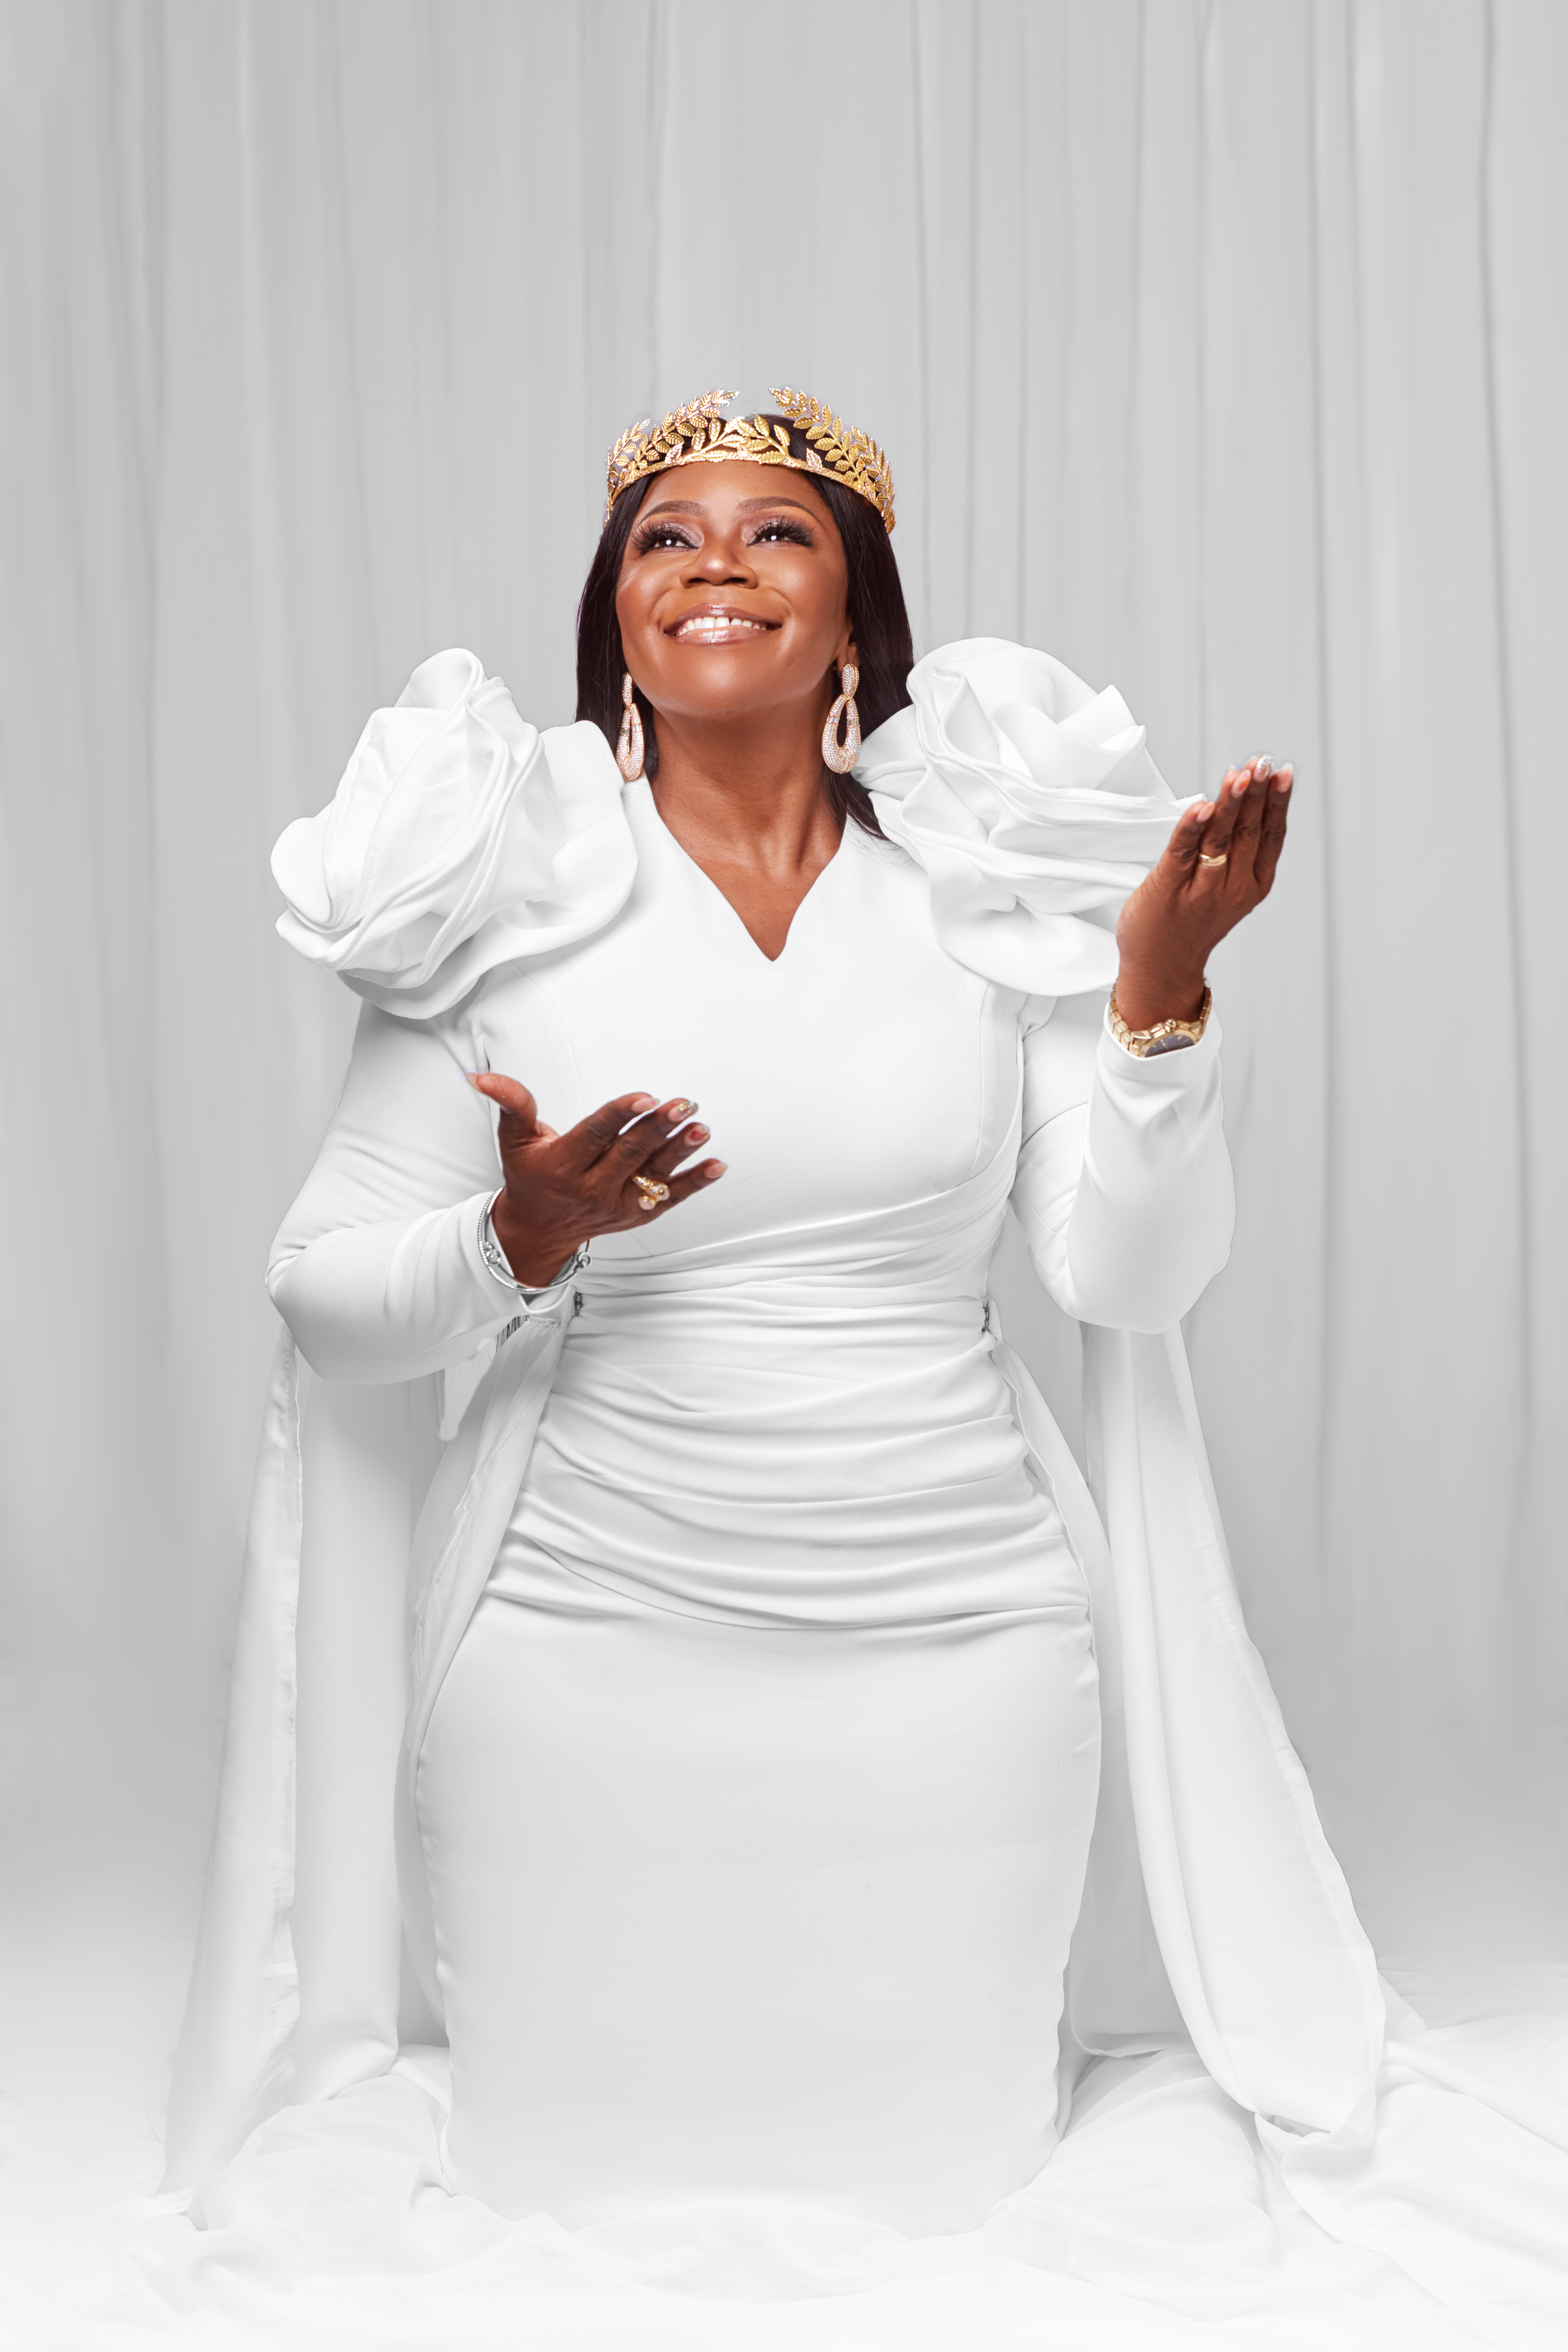 Piesie Esther Features Favorite Gospel Stars On  “Wayɛ Meyie” All Stars Rendition